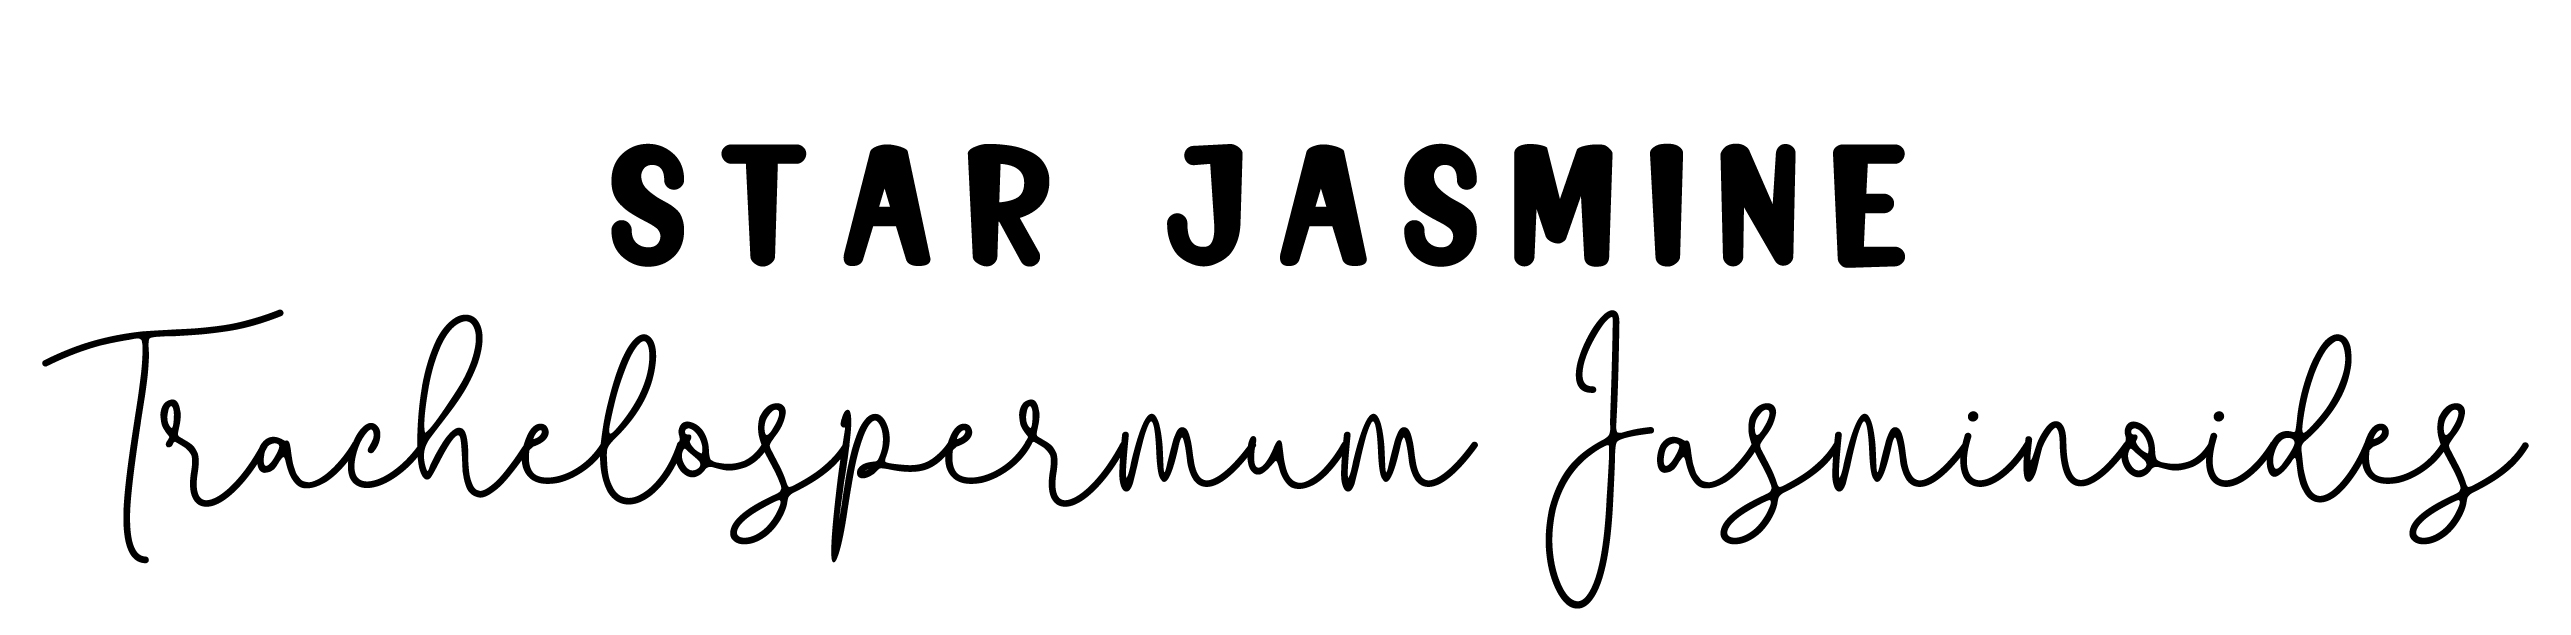 Star Jasmine:  Trachelospermum Jasminoides